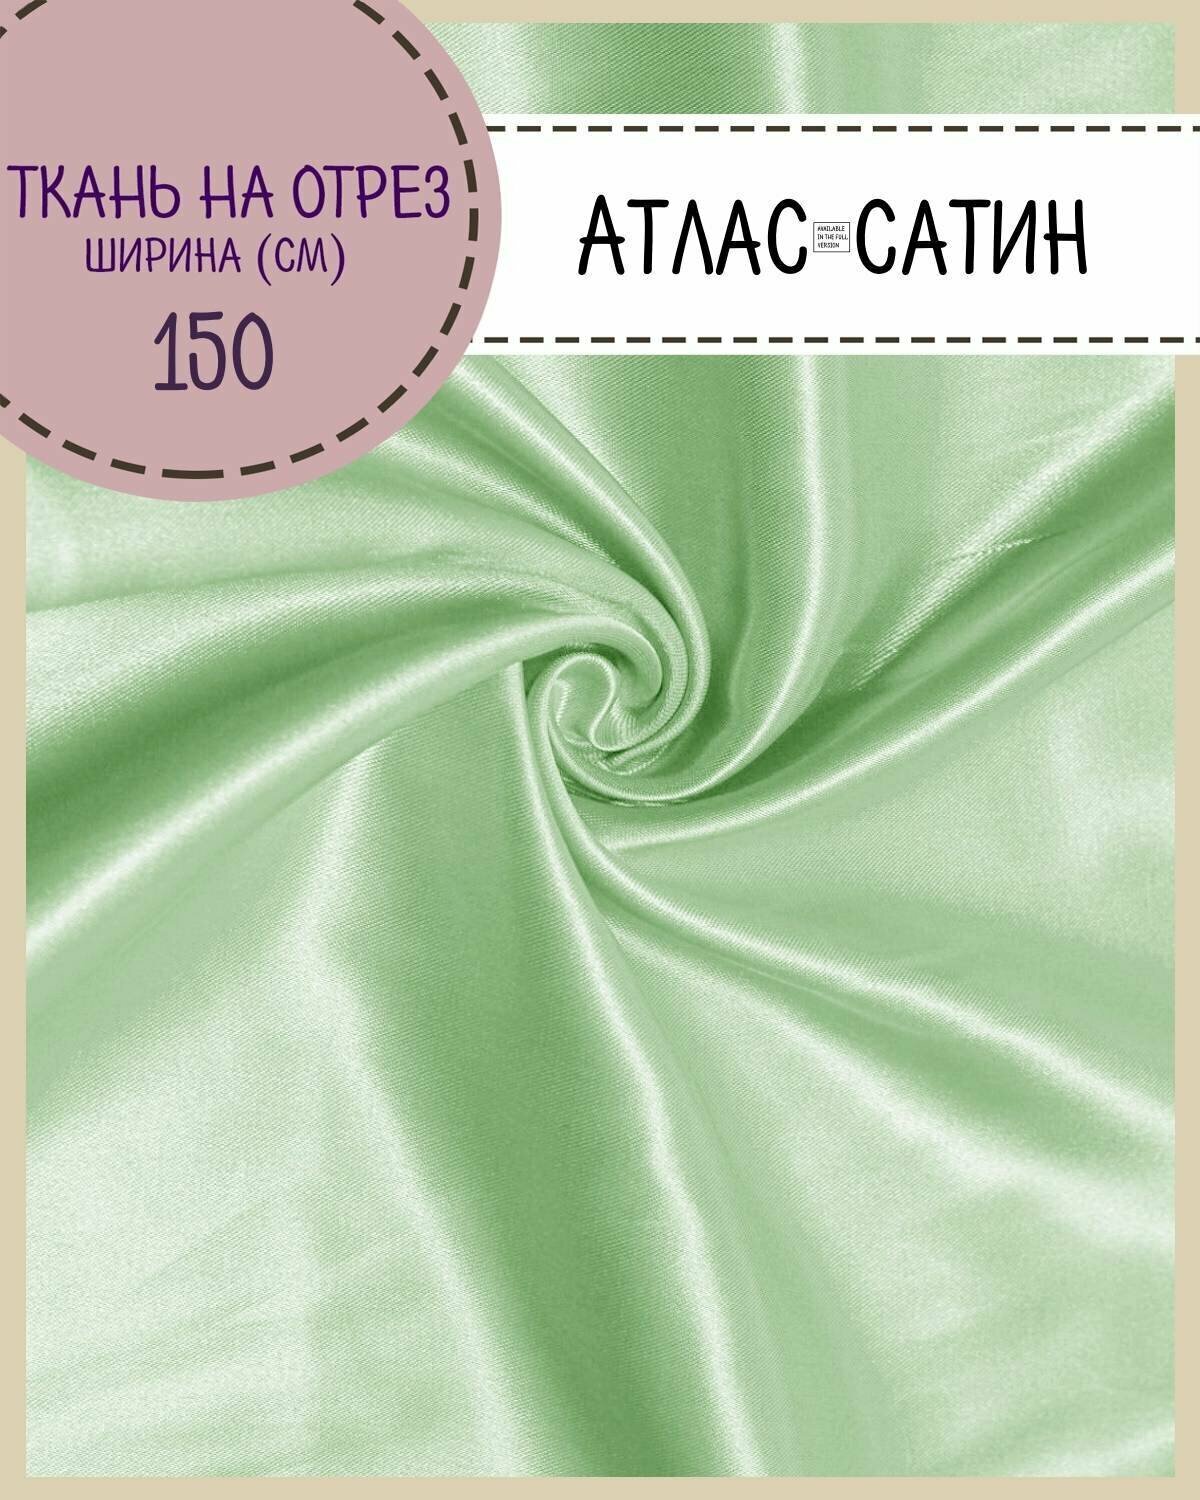 Ткань Атлас сатин, цв. нежно-салатовый, пл. 80 г/м2, ш-150 см, на отрез, цена за пог. метр